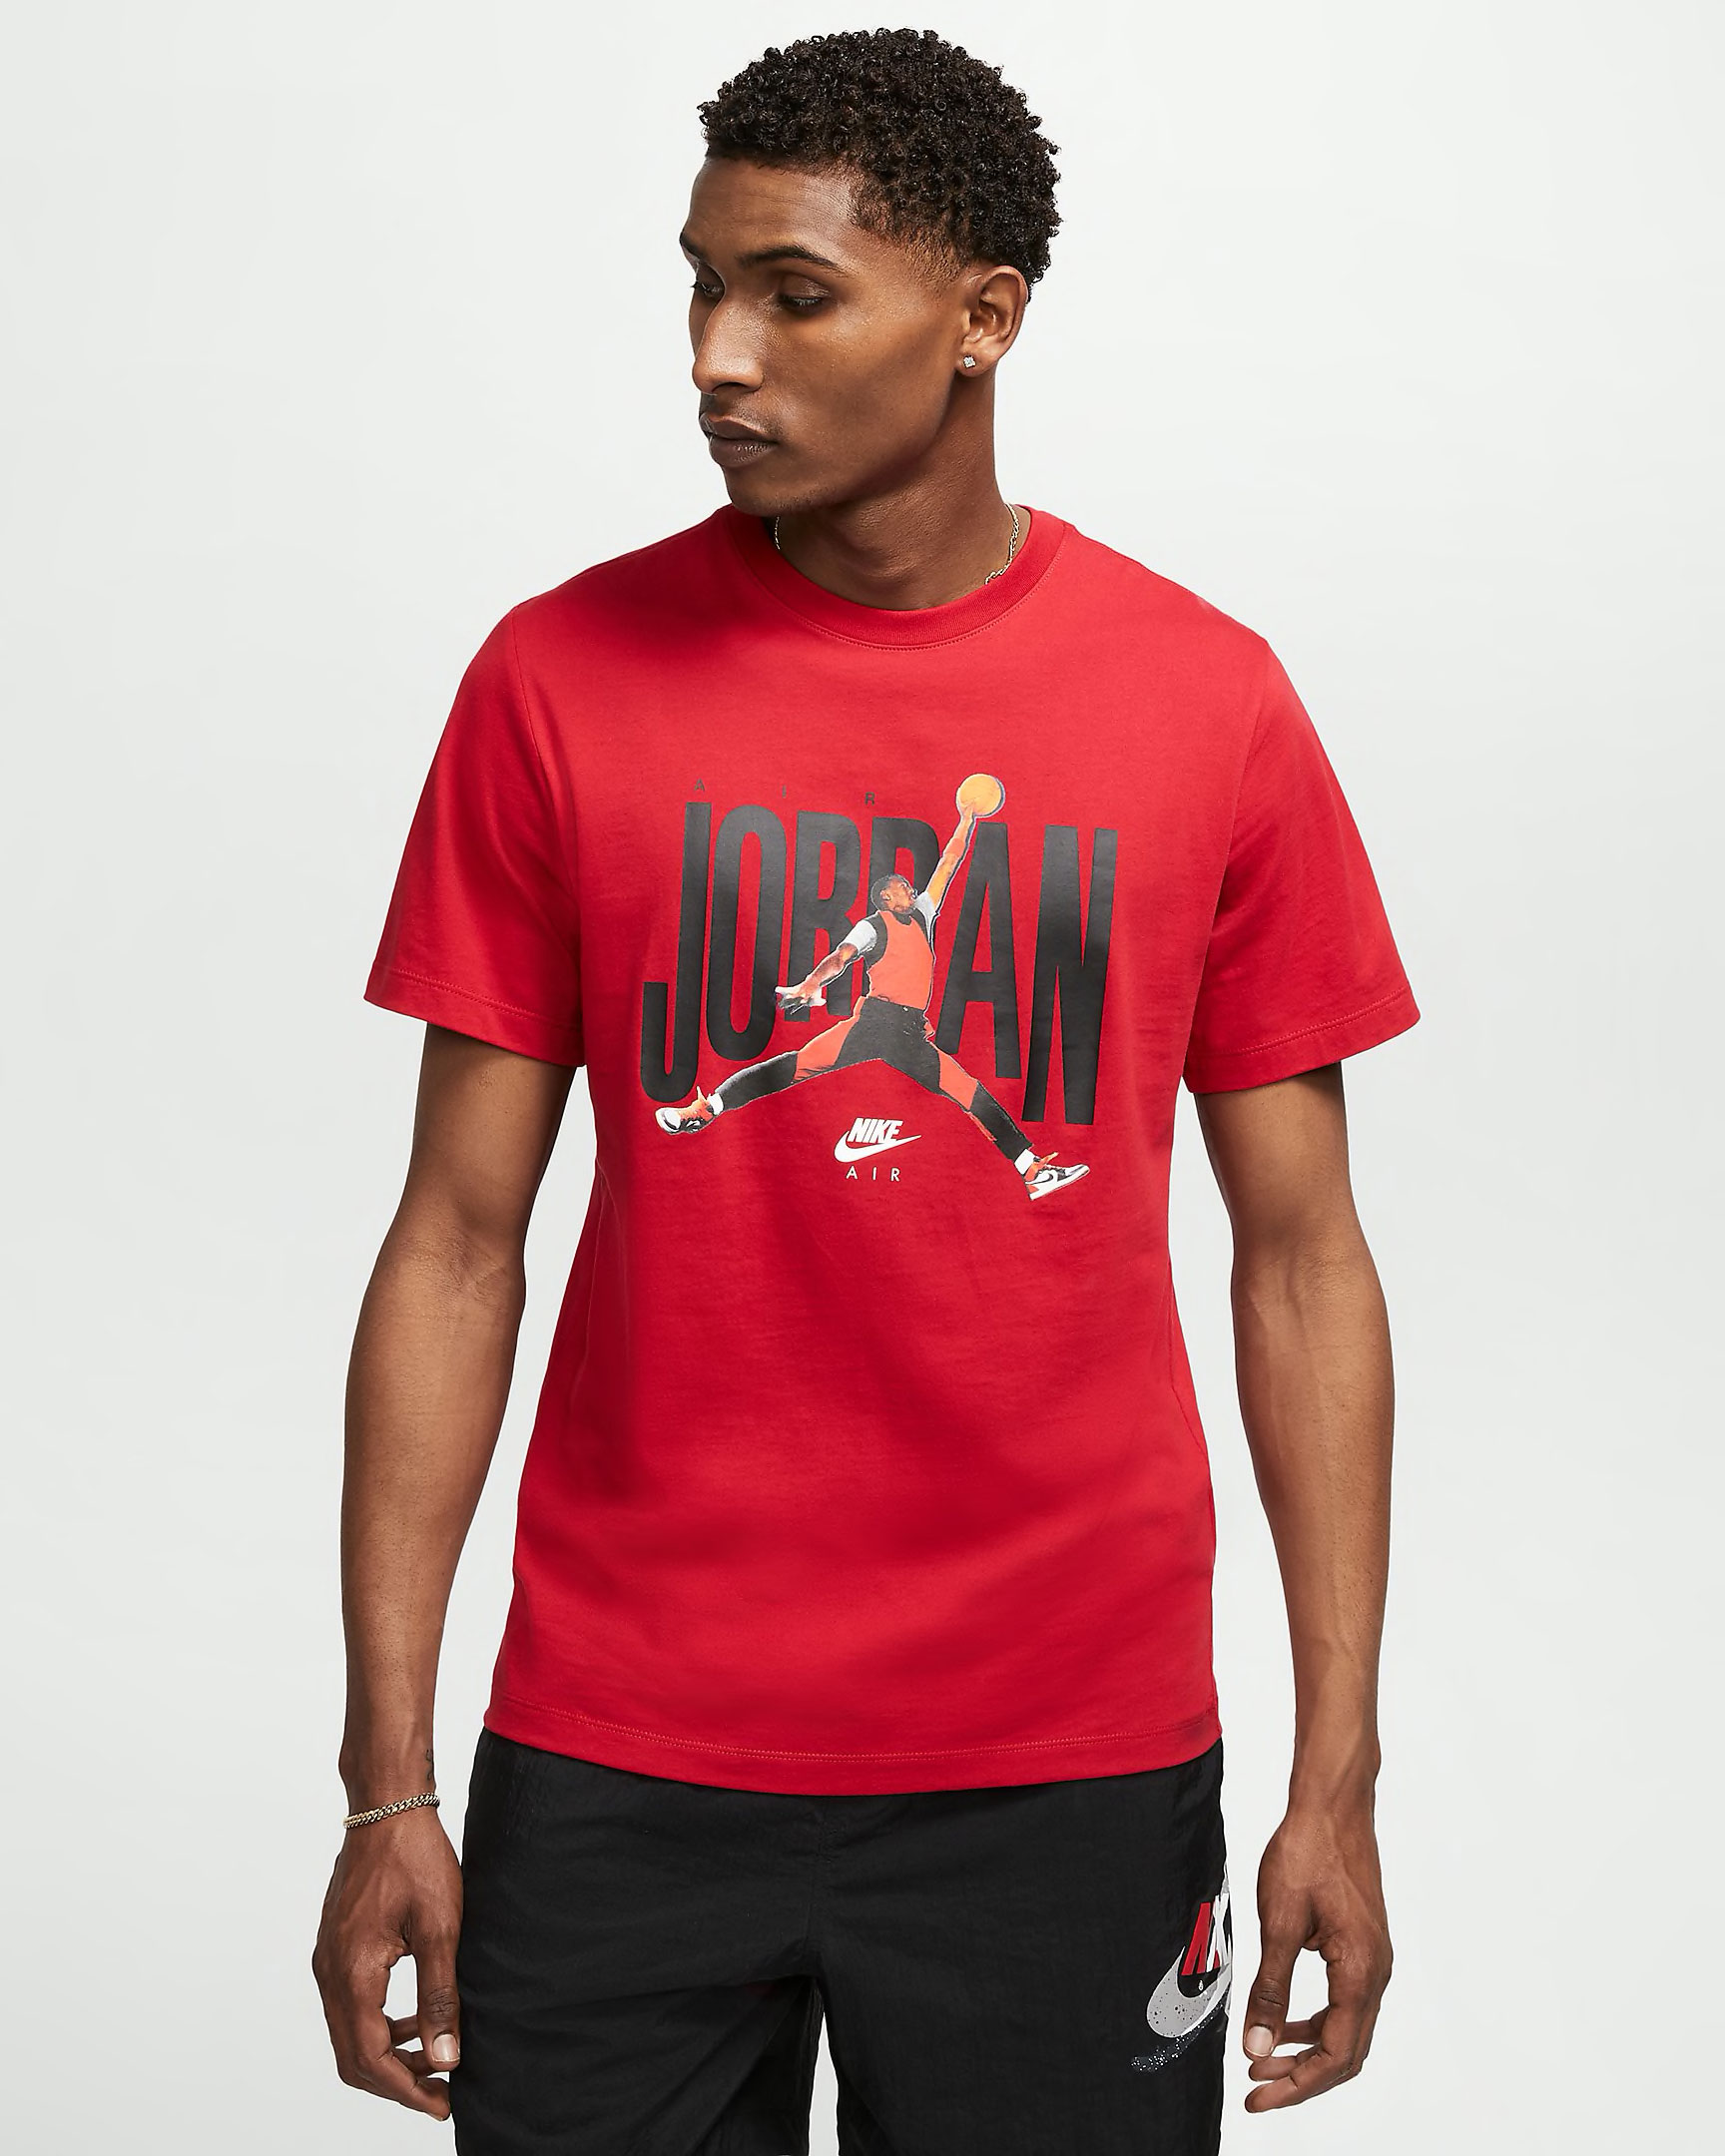 jordan-jumpman-photo-tee-shirt-red